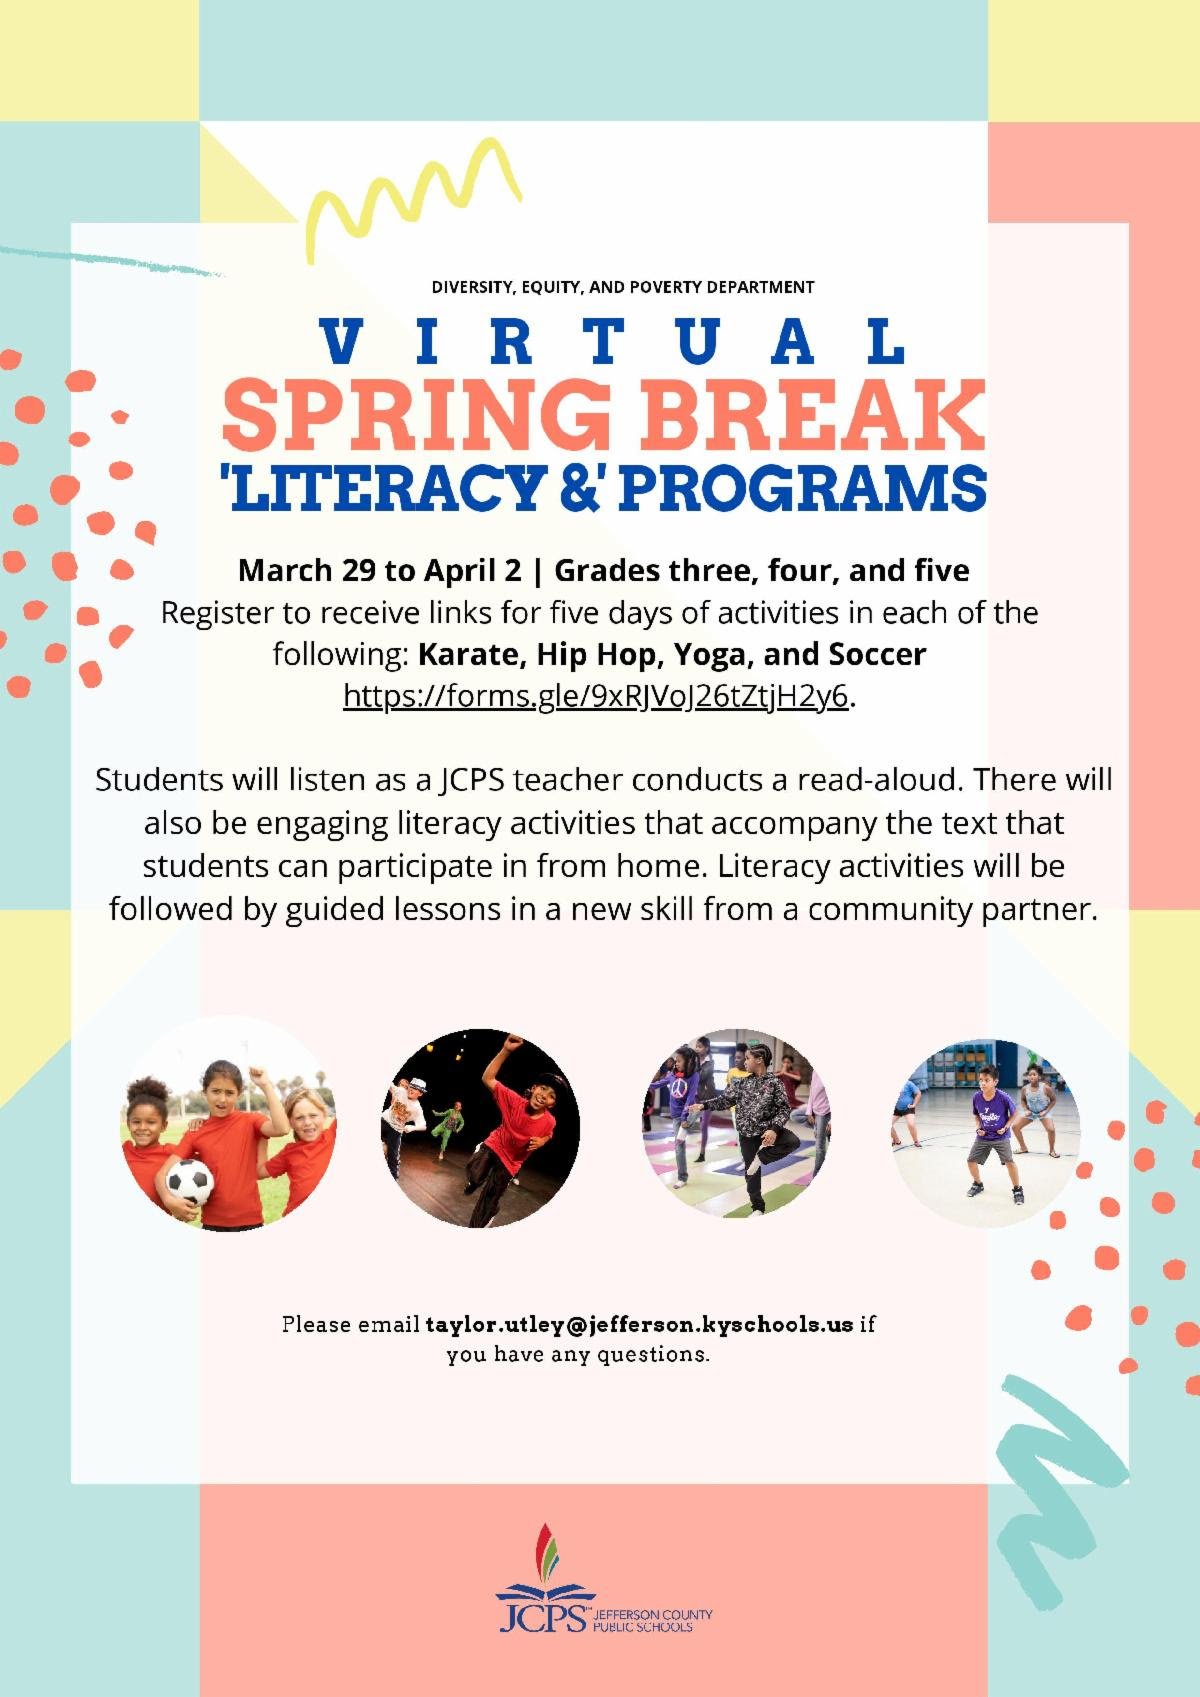 JCPS Offering Free Virtual Spring Break "Literacy &" Programs